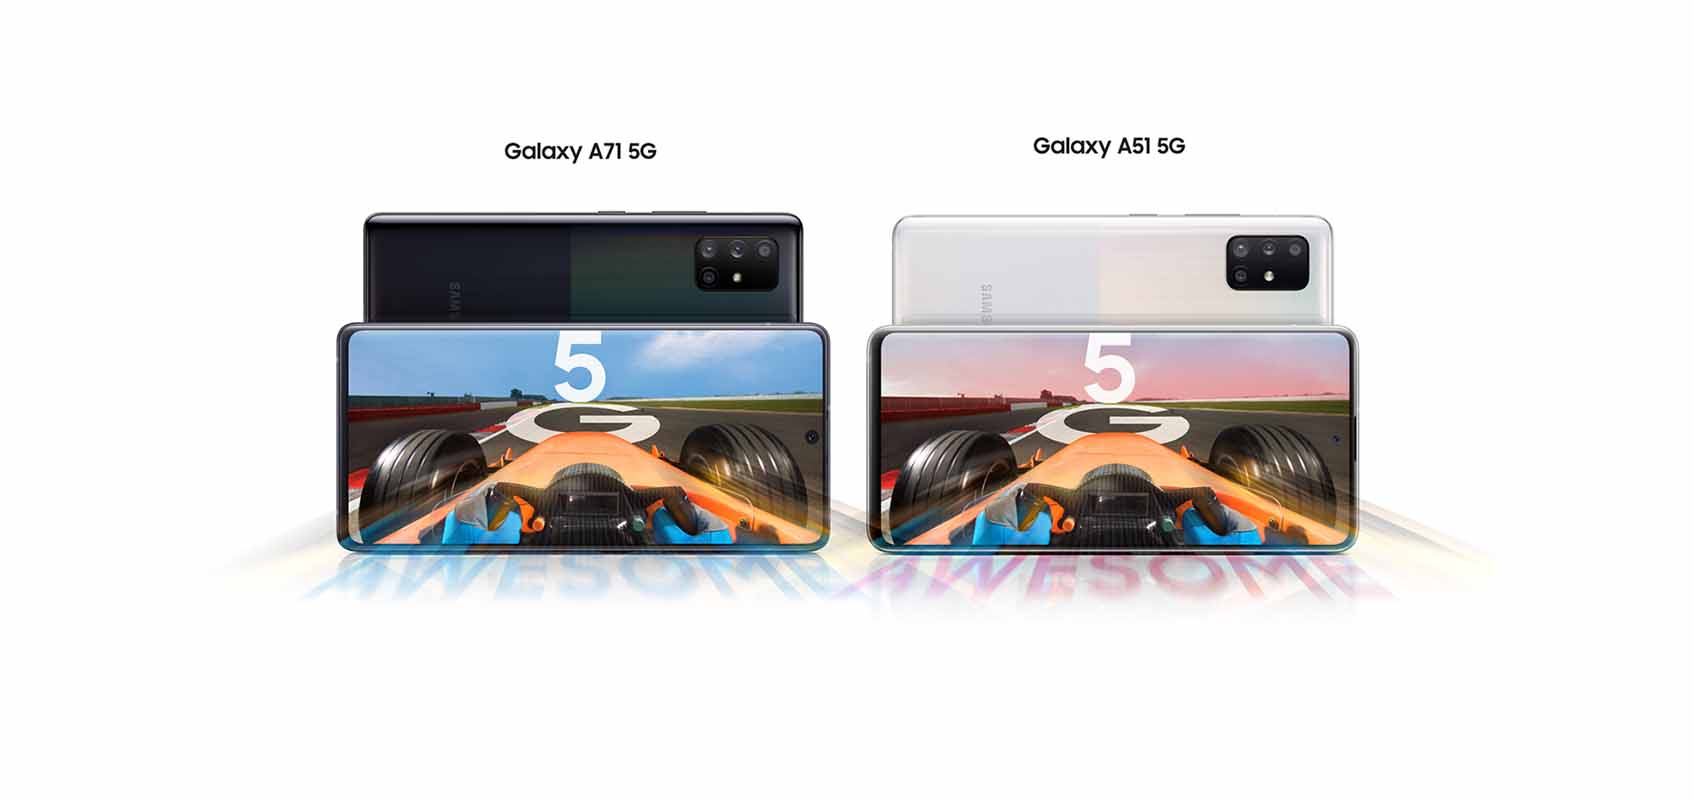 Samsung Galaxy A71 & Galaxy A51 5G smartphone with octa core processor, quad camera setup, FHD+ display, & 4,500 mAh battery